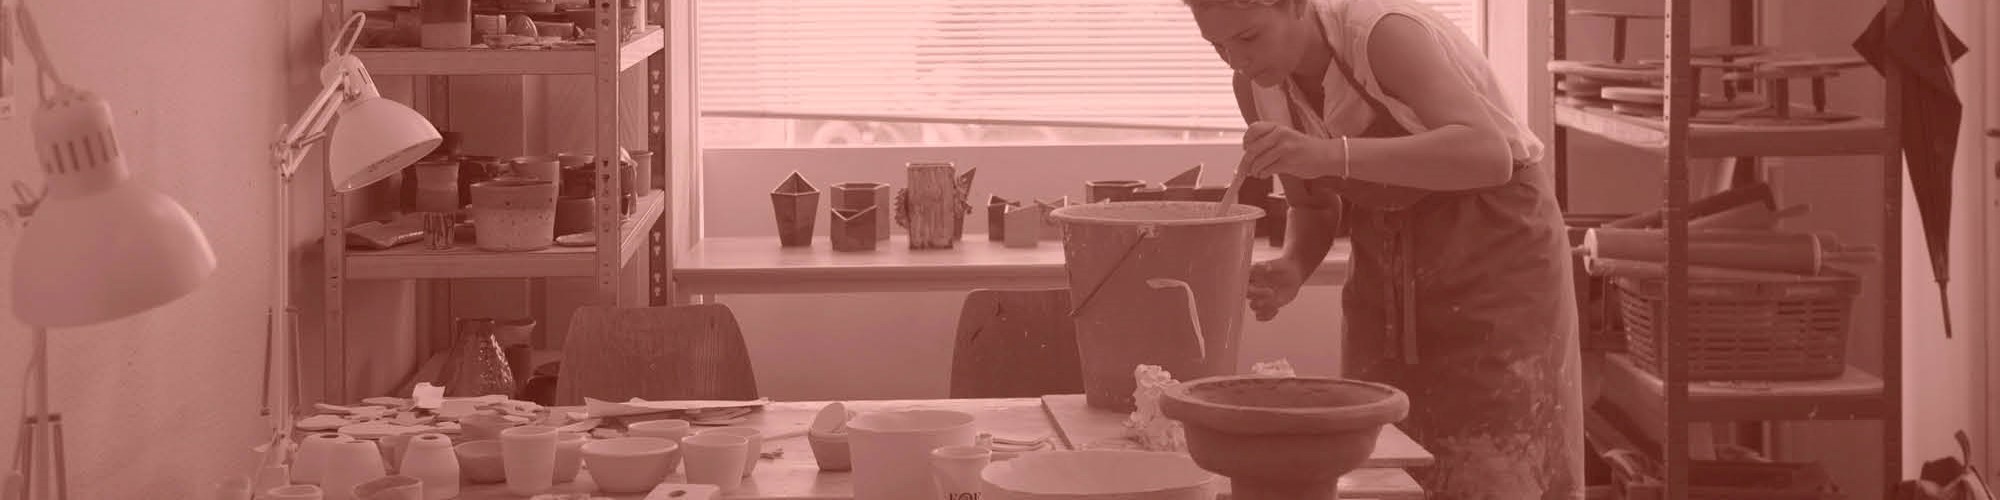 Kreative kurser – keramik og meget mere